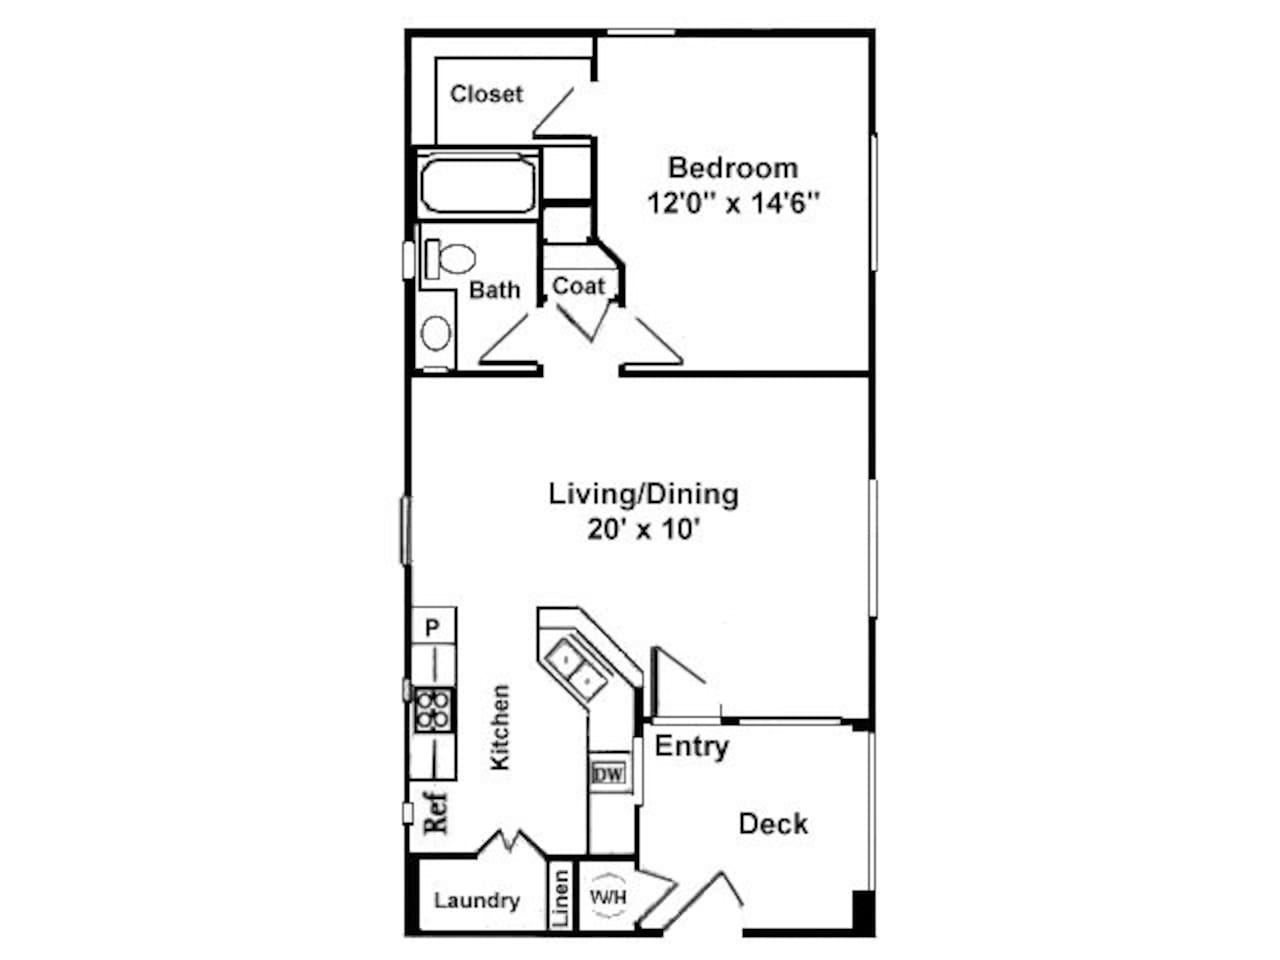 Floorplan diagram for Anacea, showing 1 bedroom